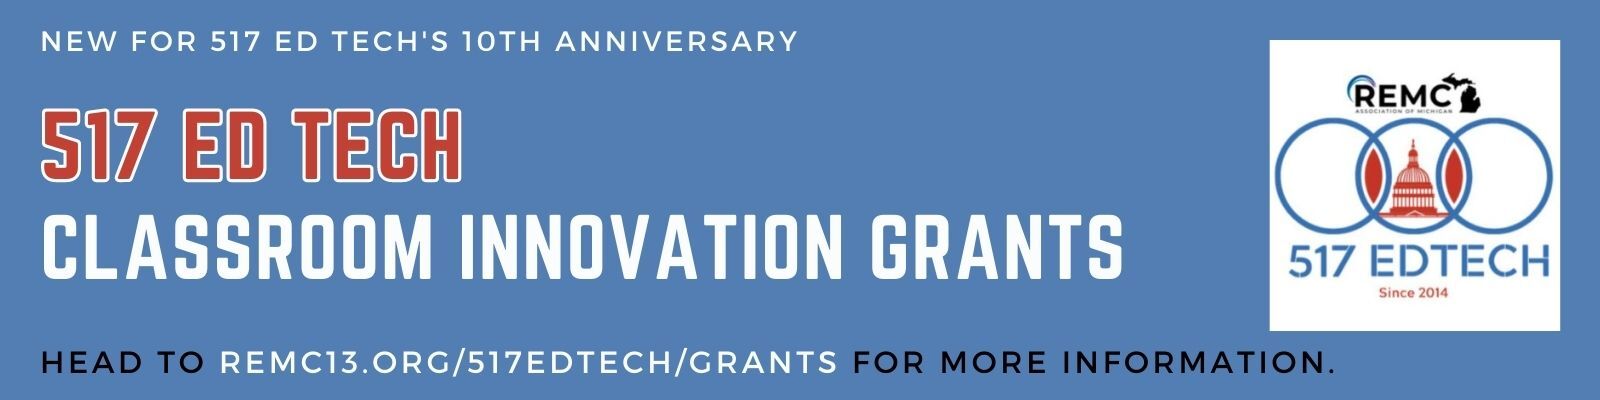 517 ed tech Classroom Innovation Grants